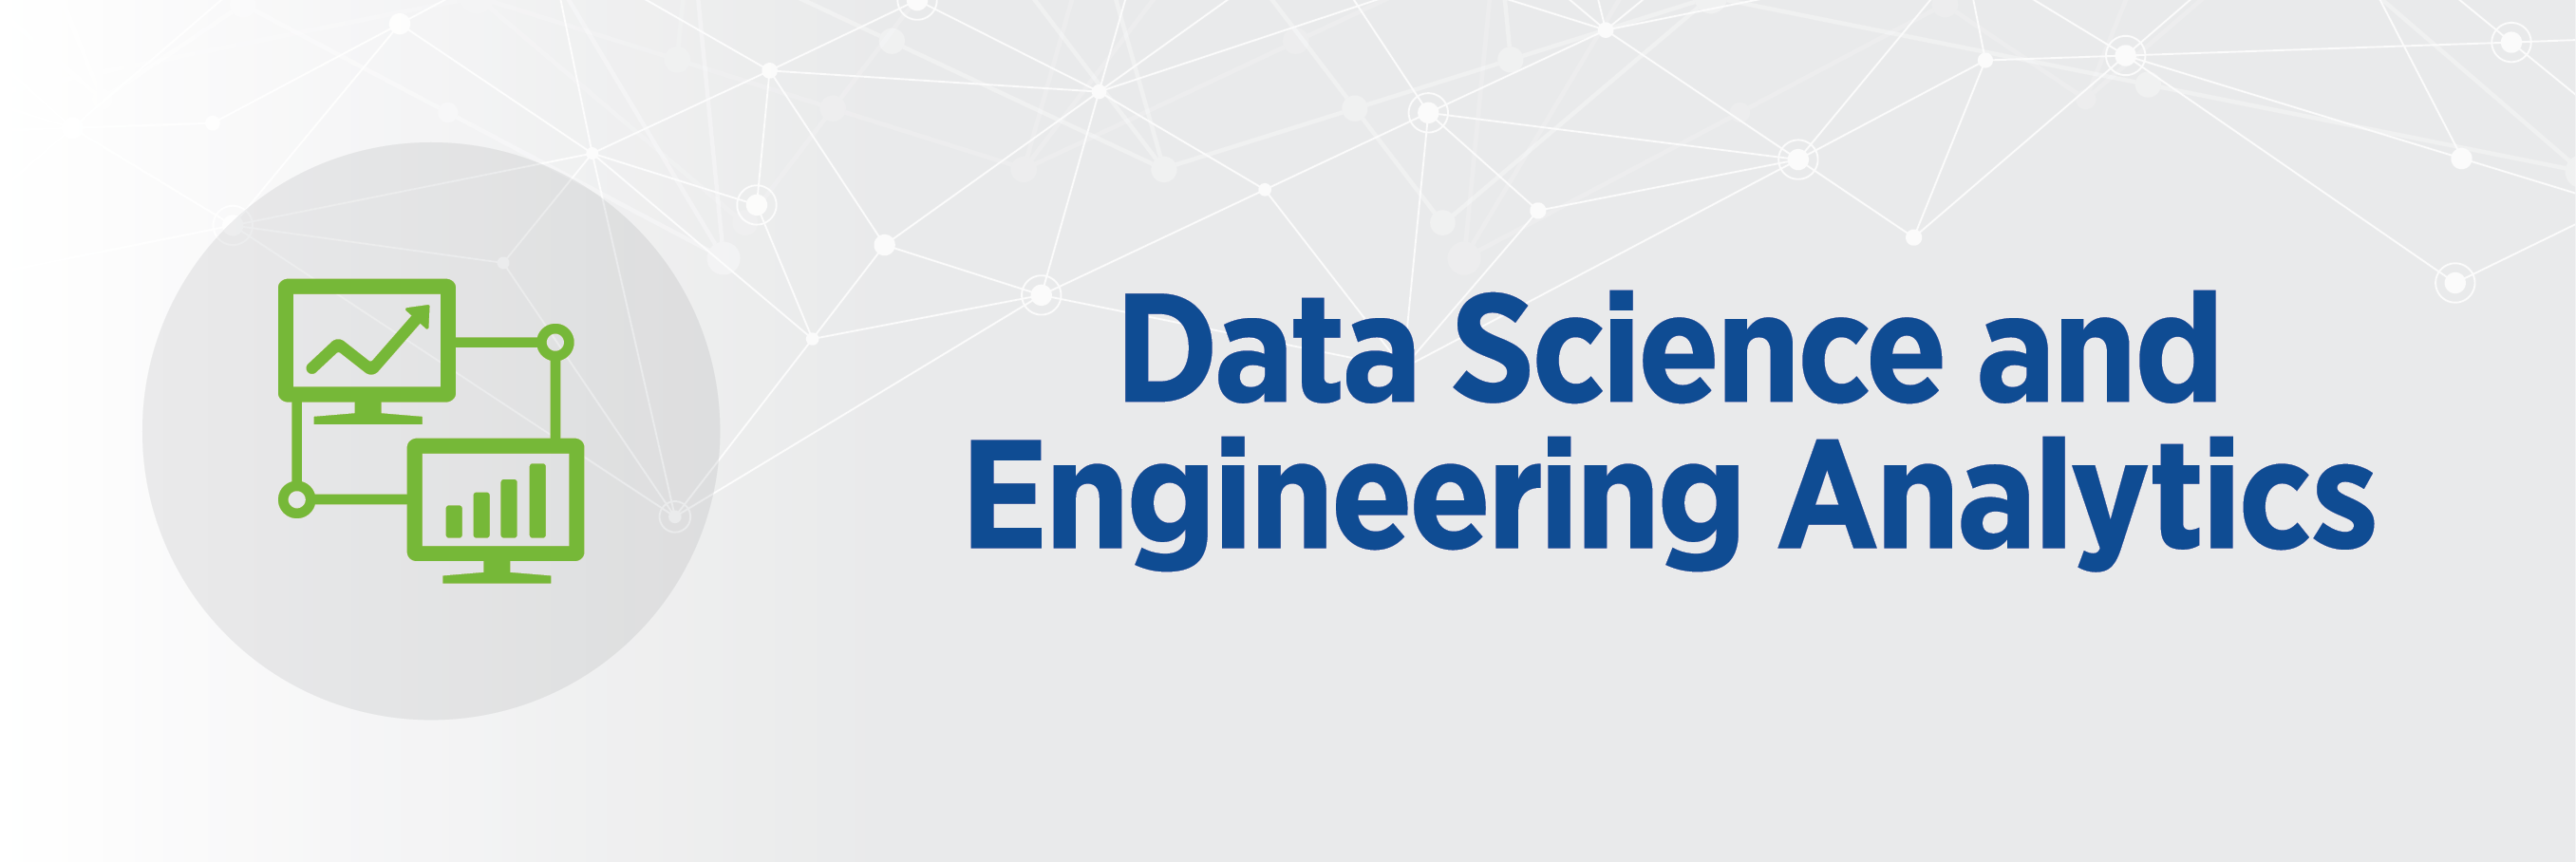 Data Science and Engineering Analytics